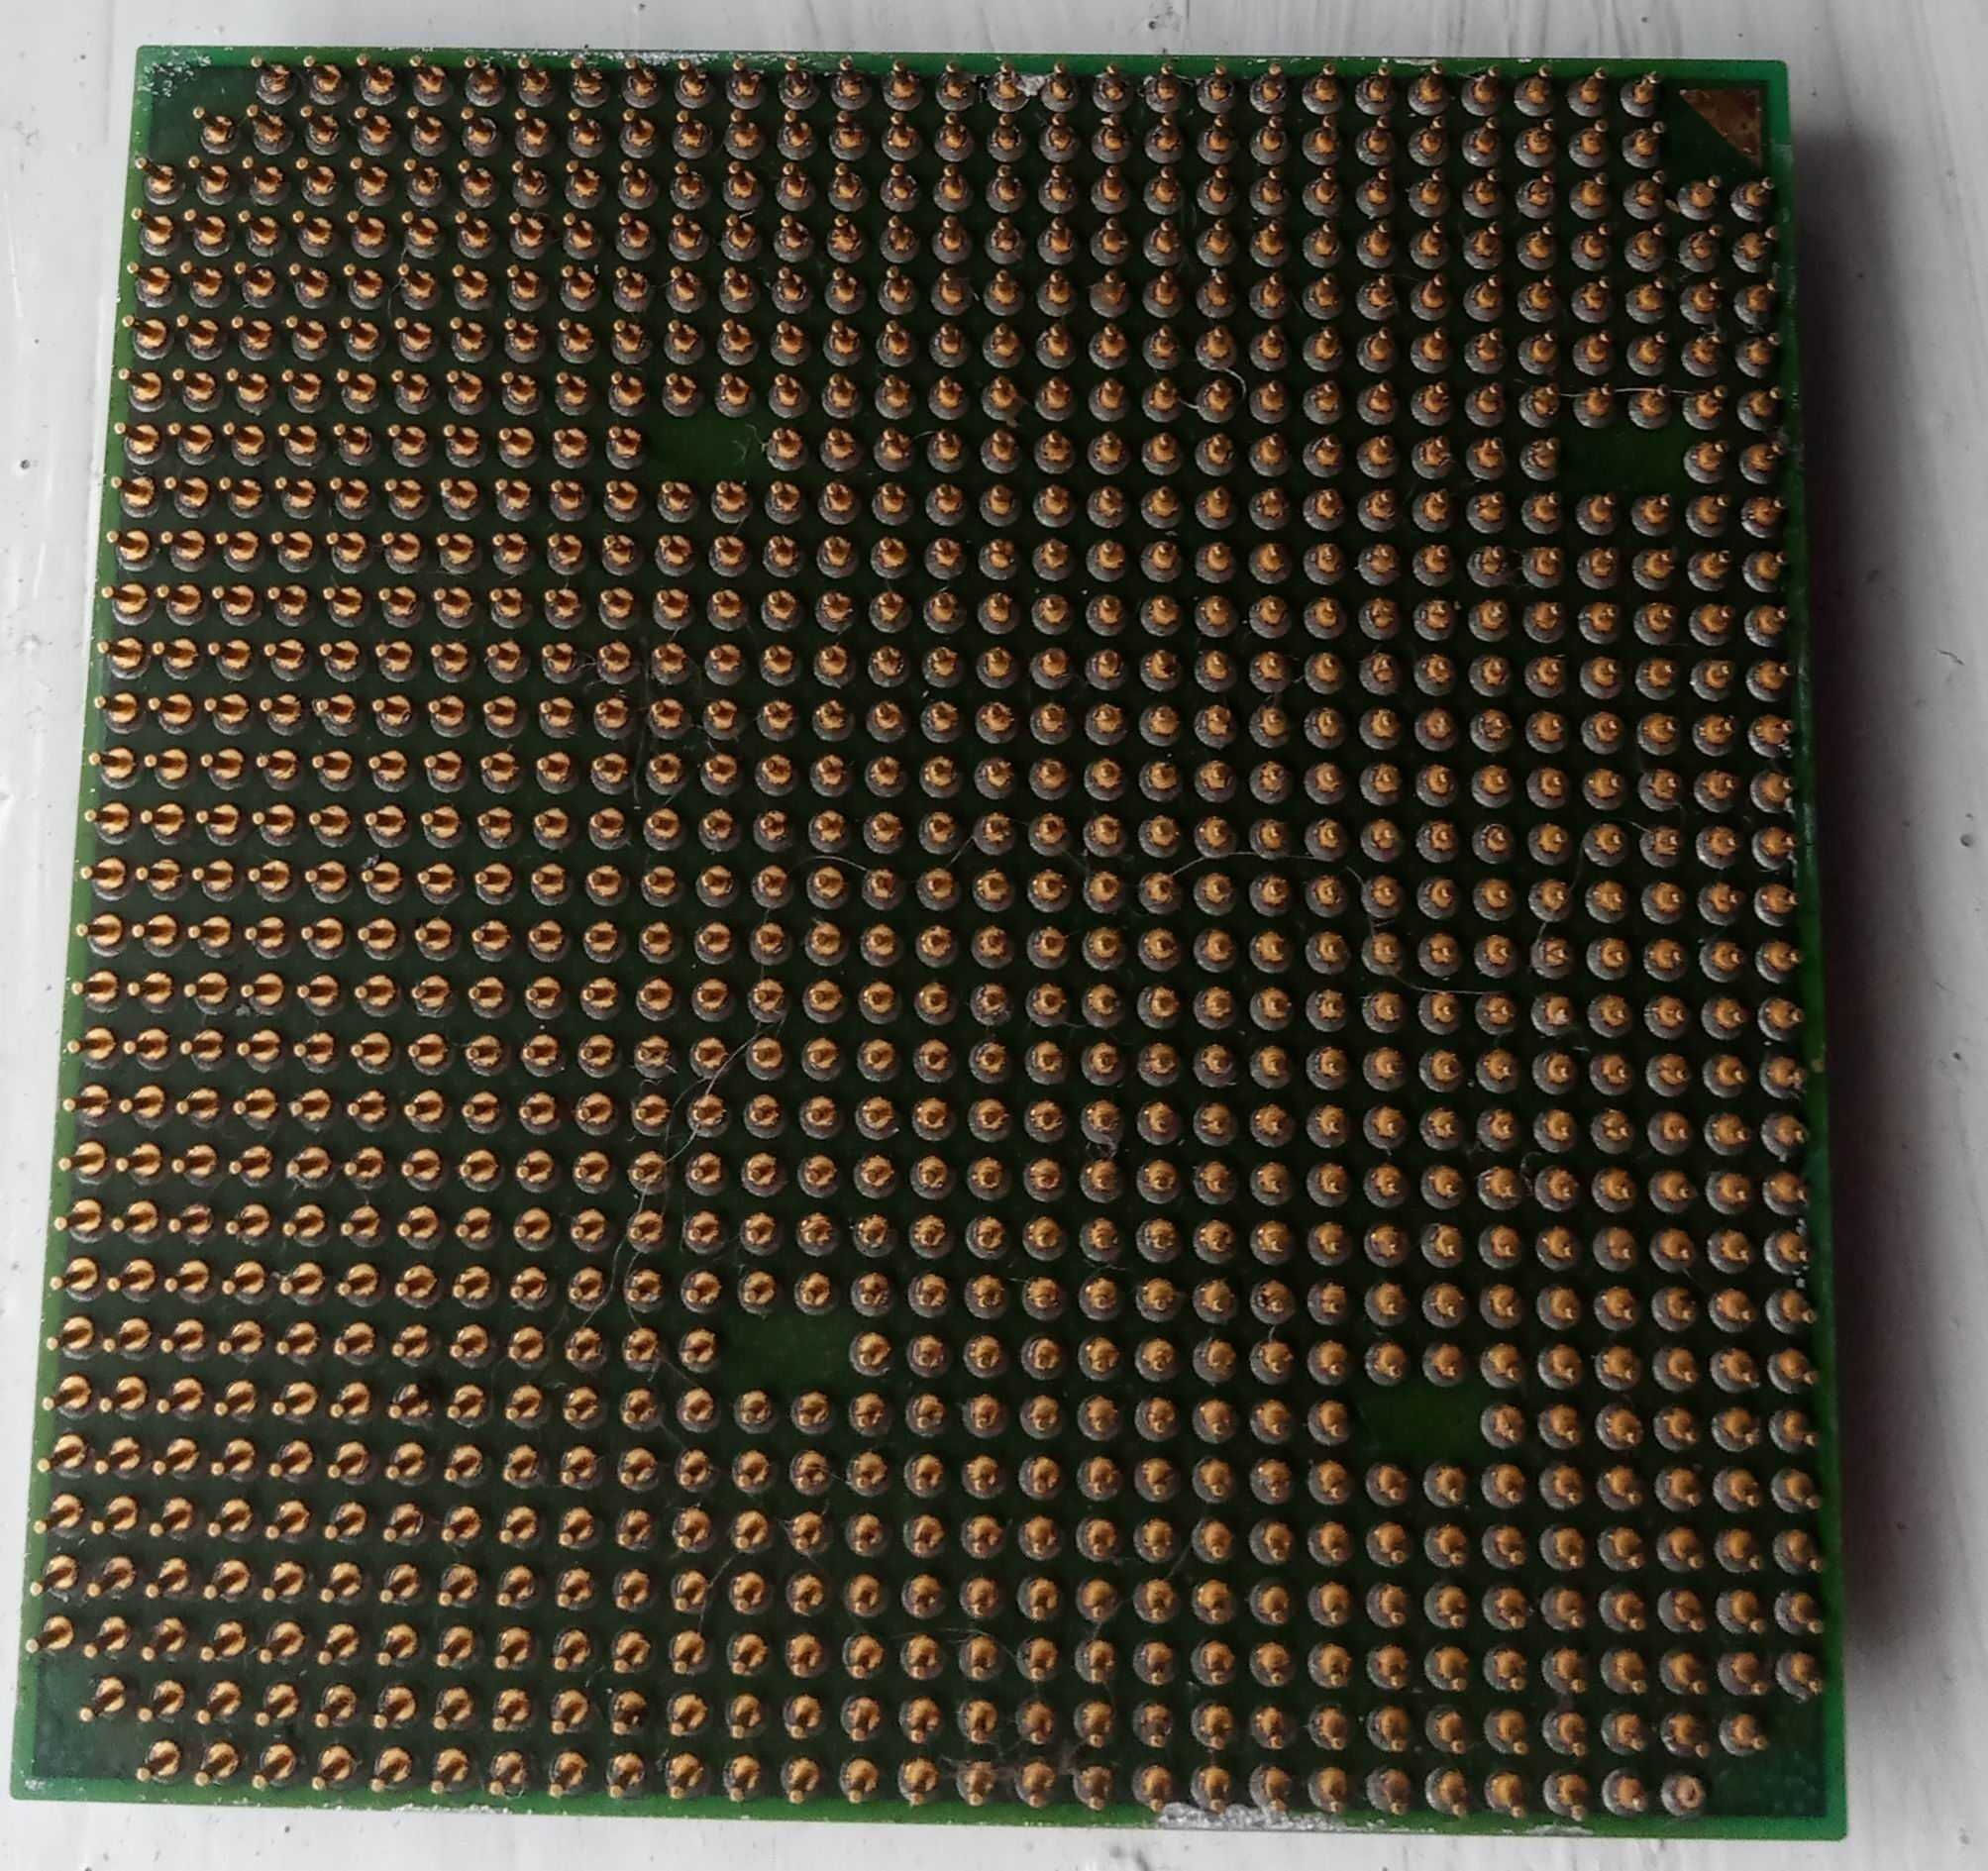 Procesor AMD Athlon 64 X2 4800+